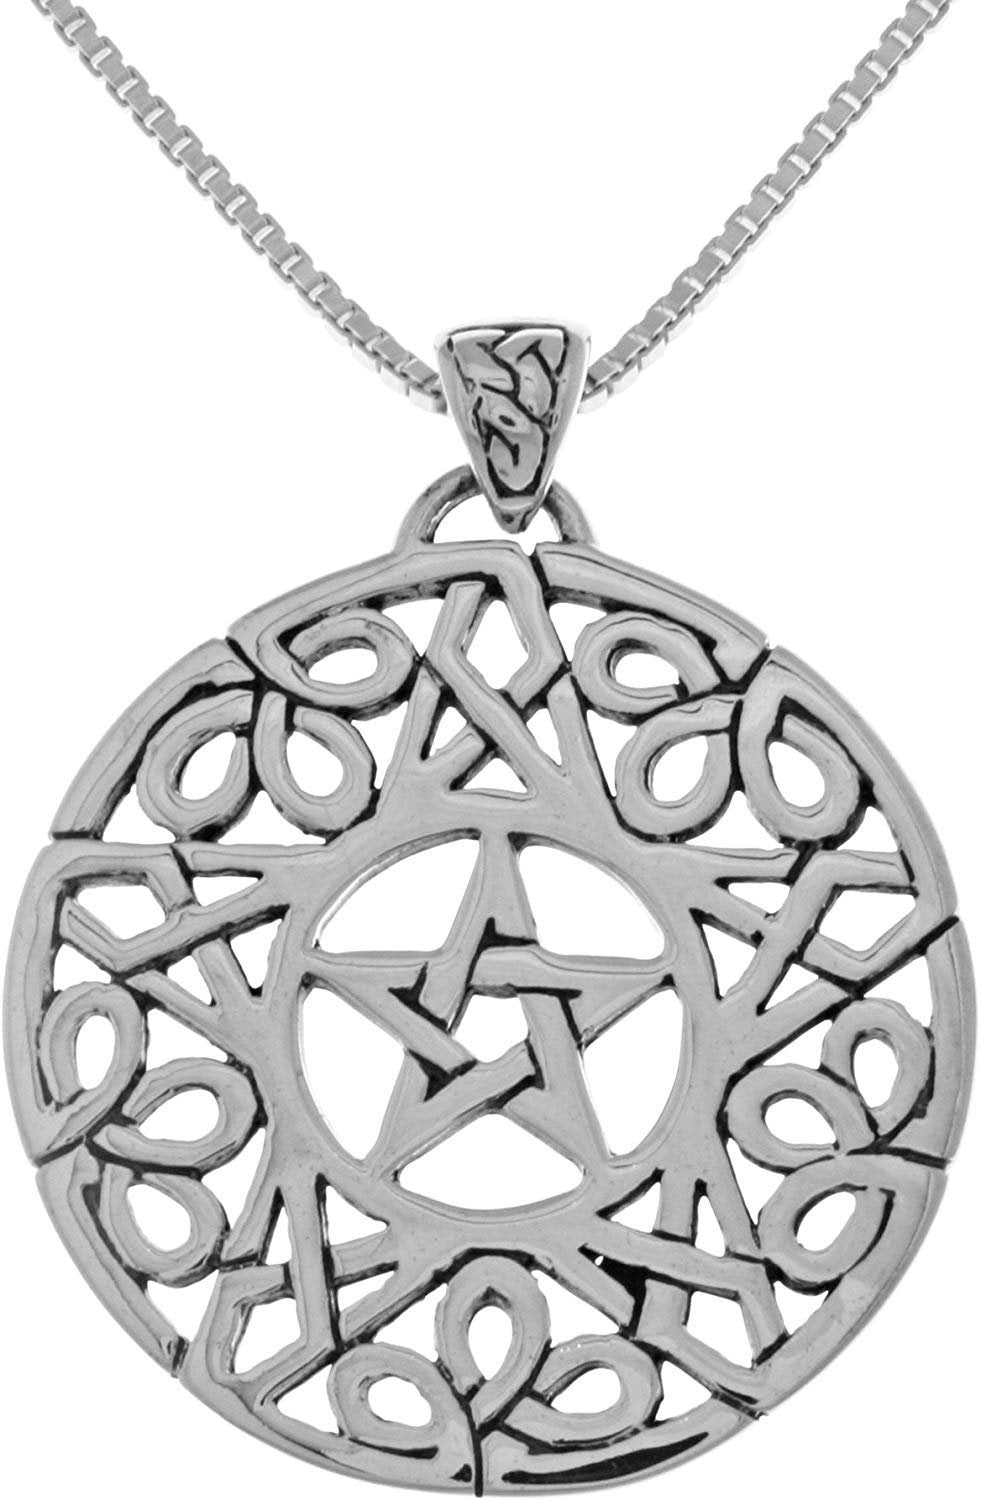 Jewelry Trends Celtic Star Pentacle Pentagram Sterling Silver Pendant Necklace 18"